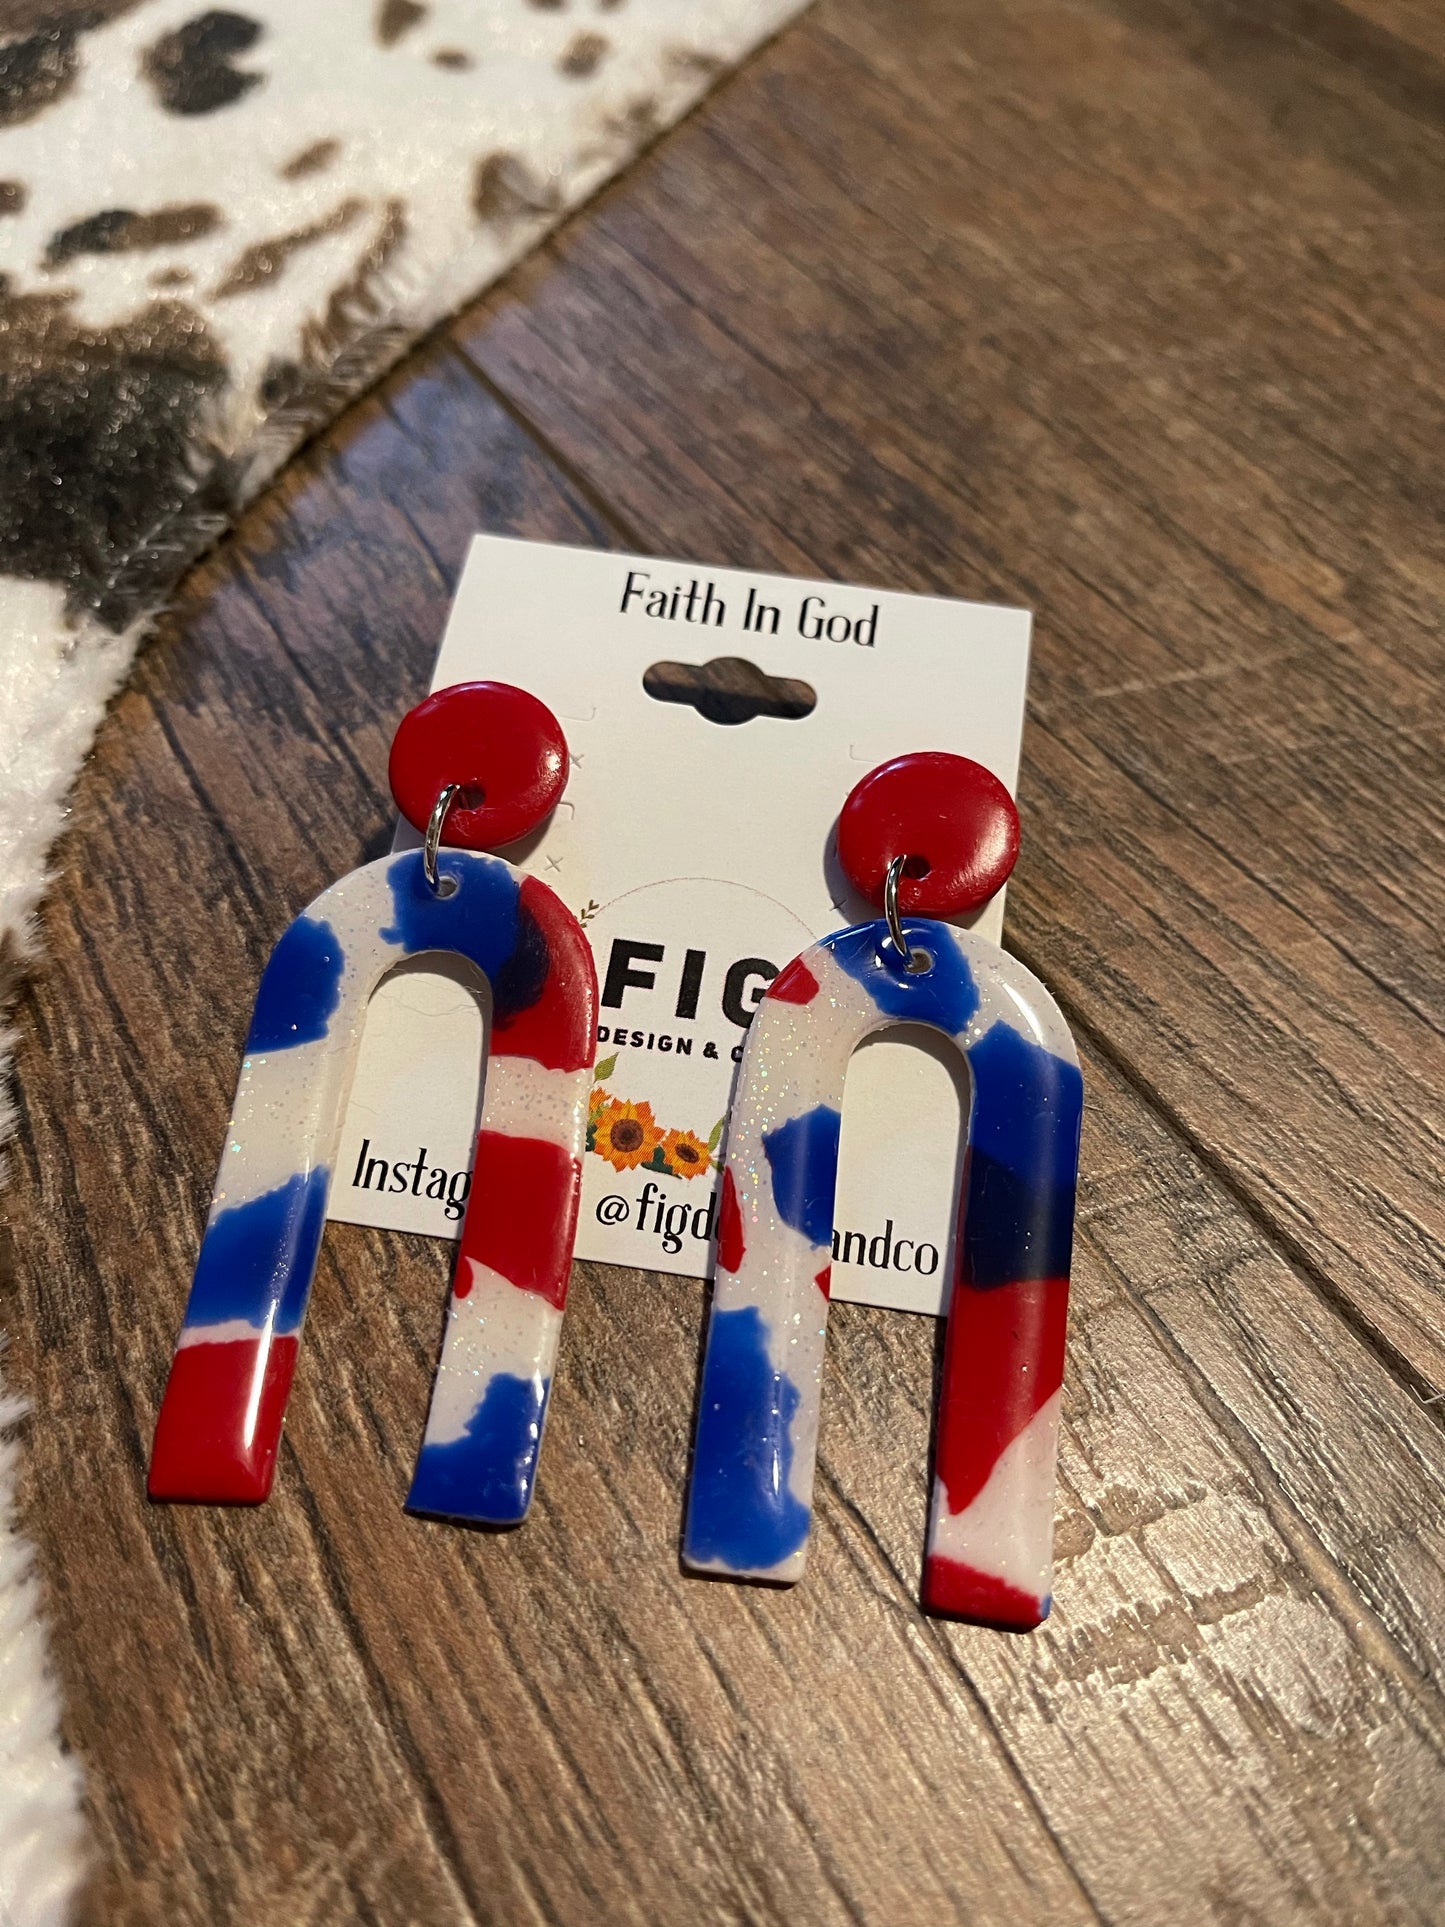 FIG // Handmade Clay Earrings - Red, White, & Blue Rainbow Dangles